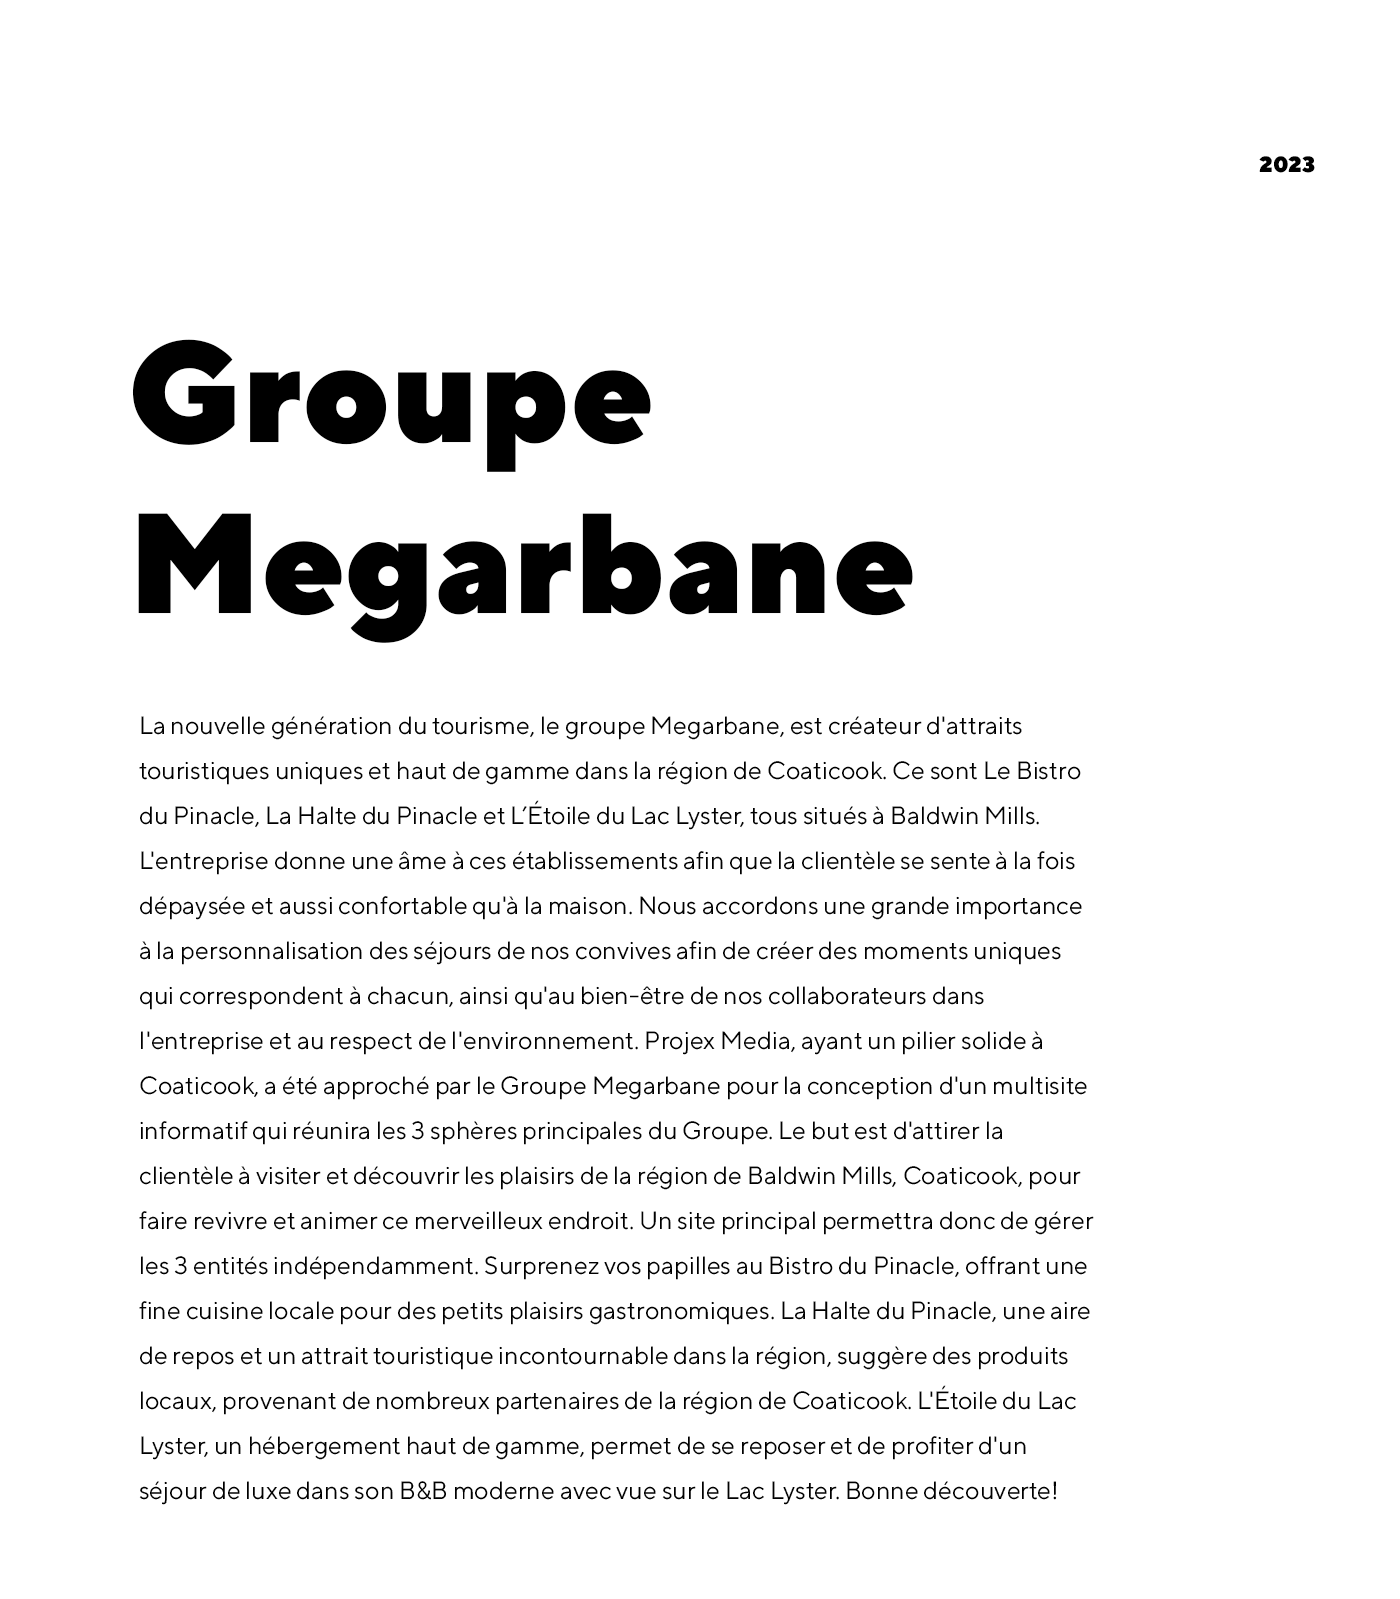 Groupe Mégarbane / 2023 - Réalisation signée Projex Media